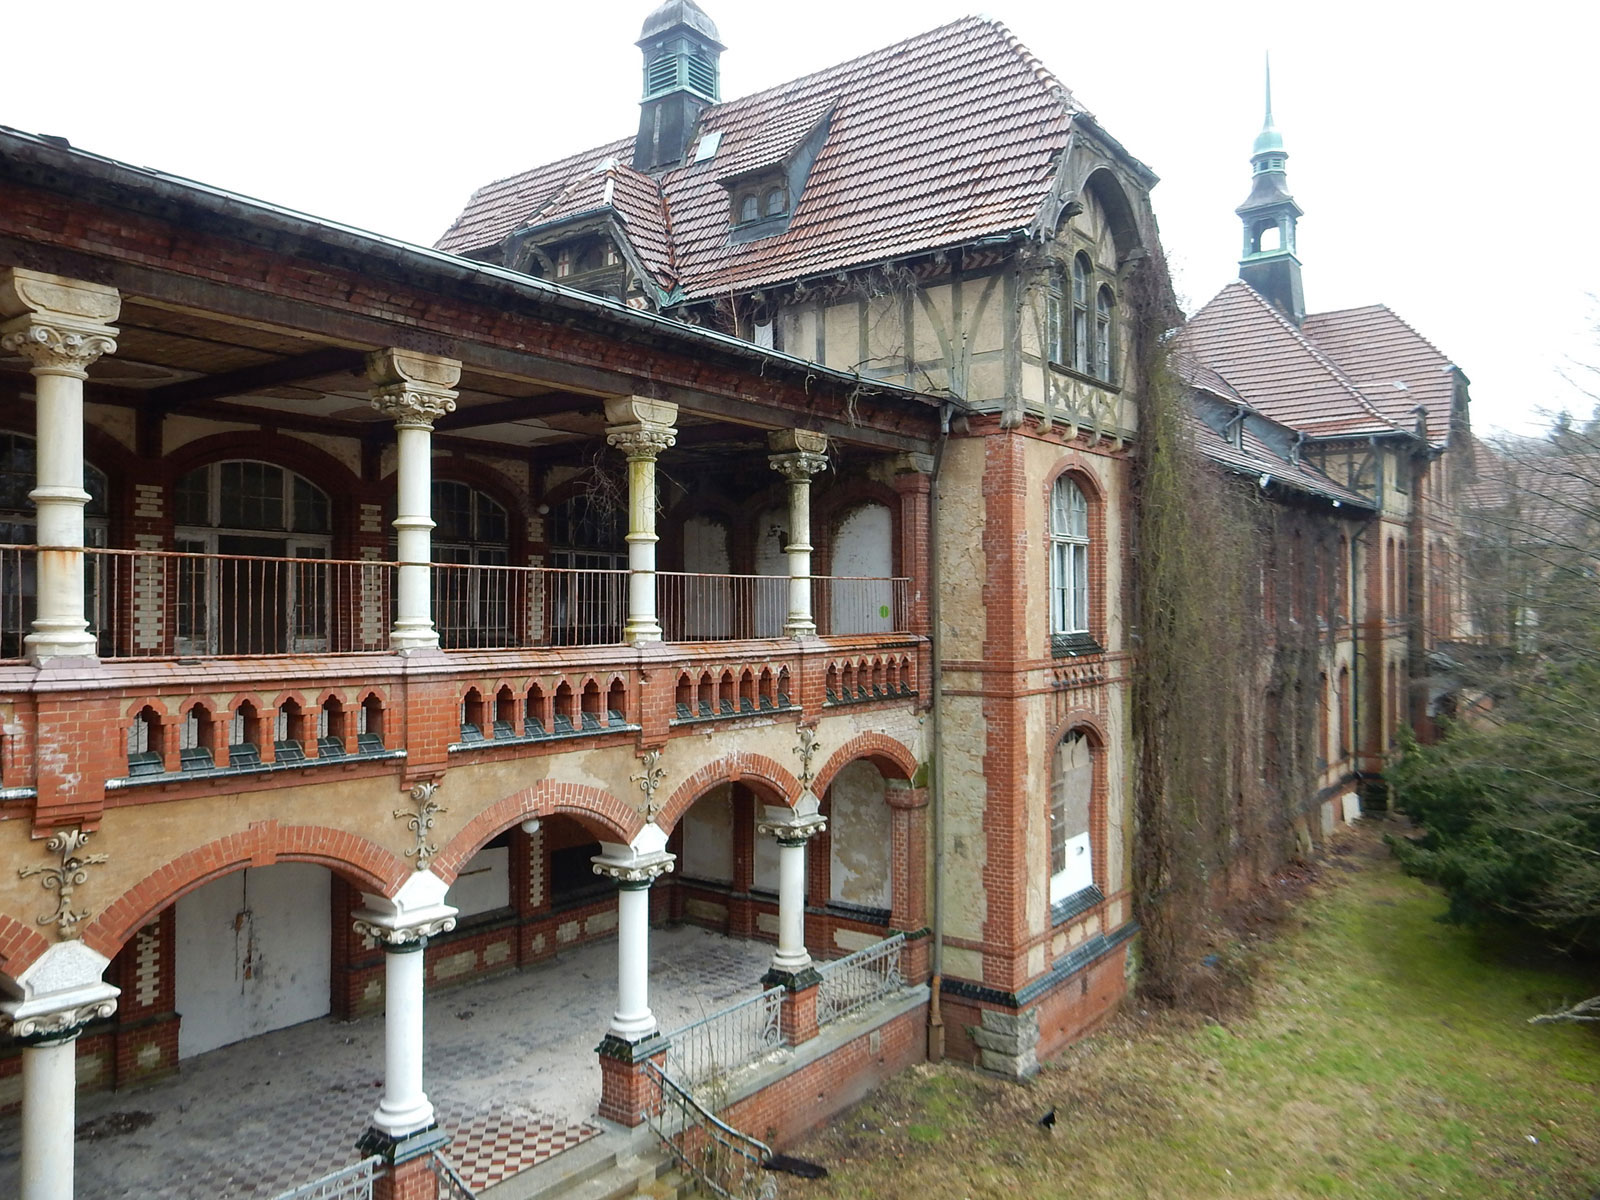 Fototour Beelitz Heilstätten